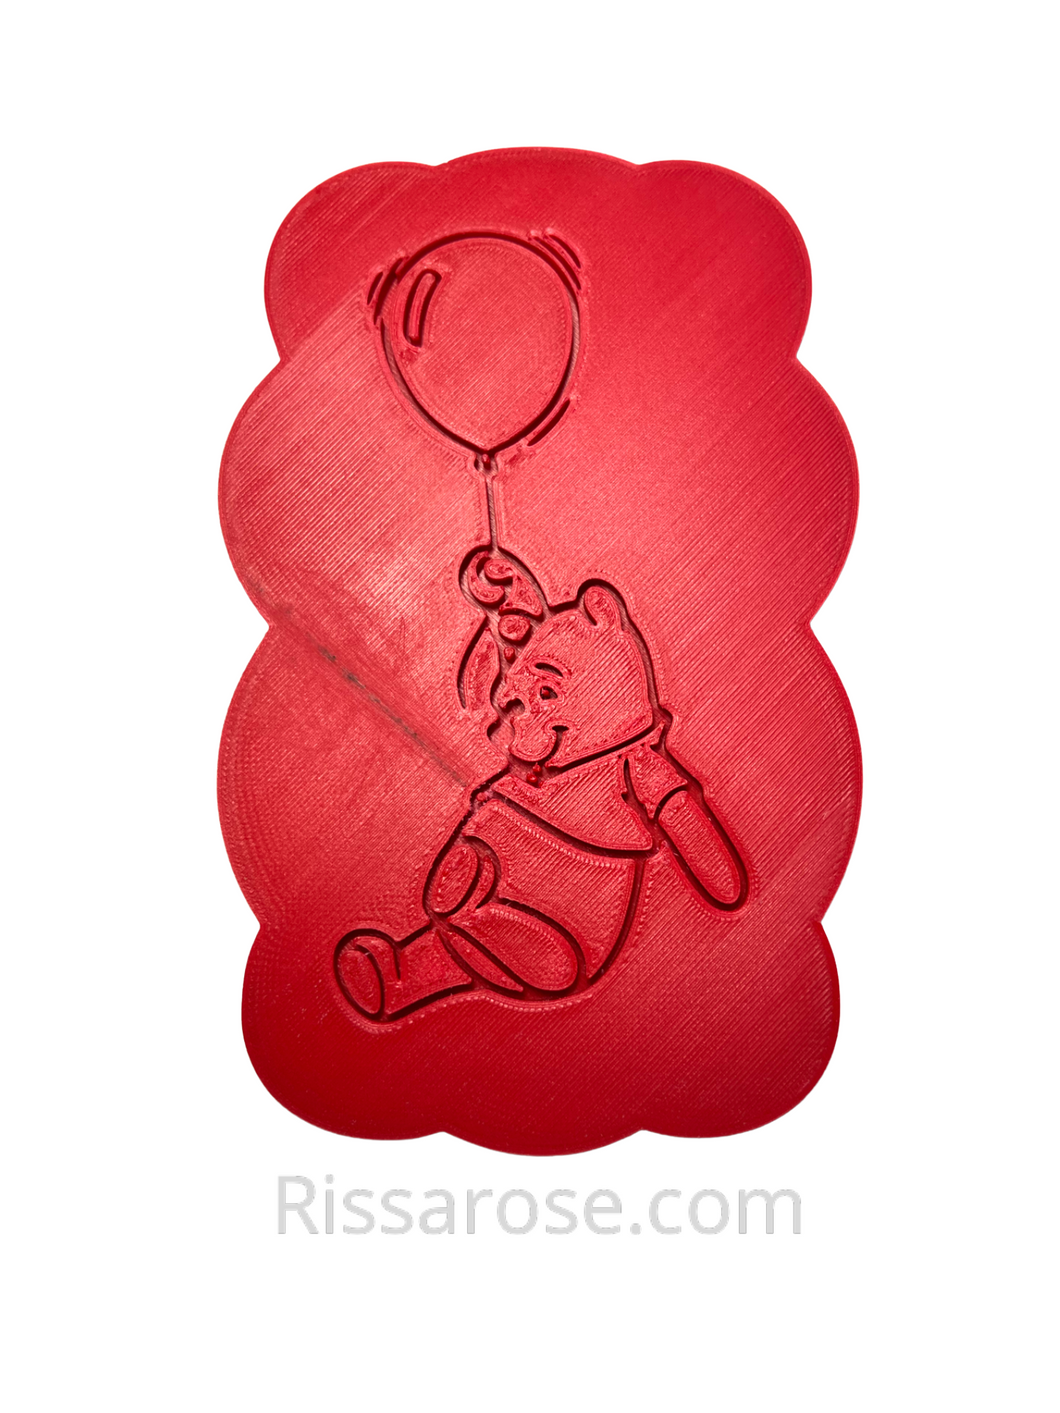 secondary debosser - winnie with balloon